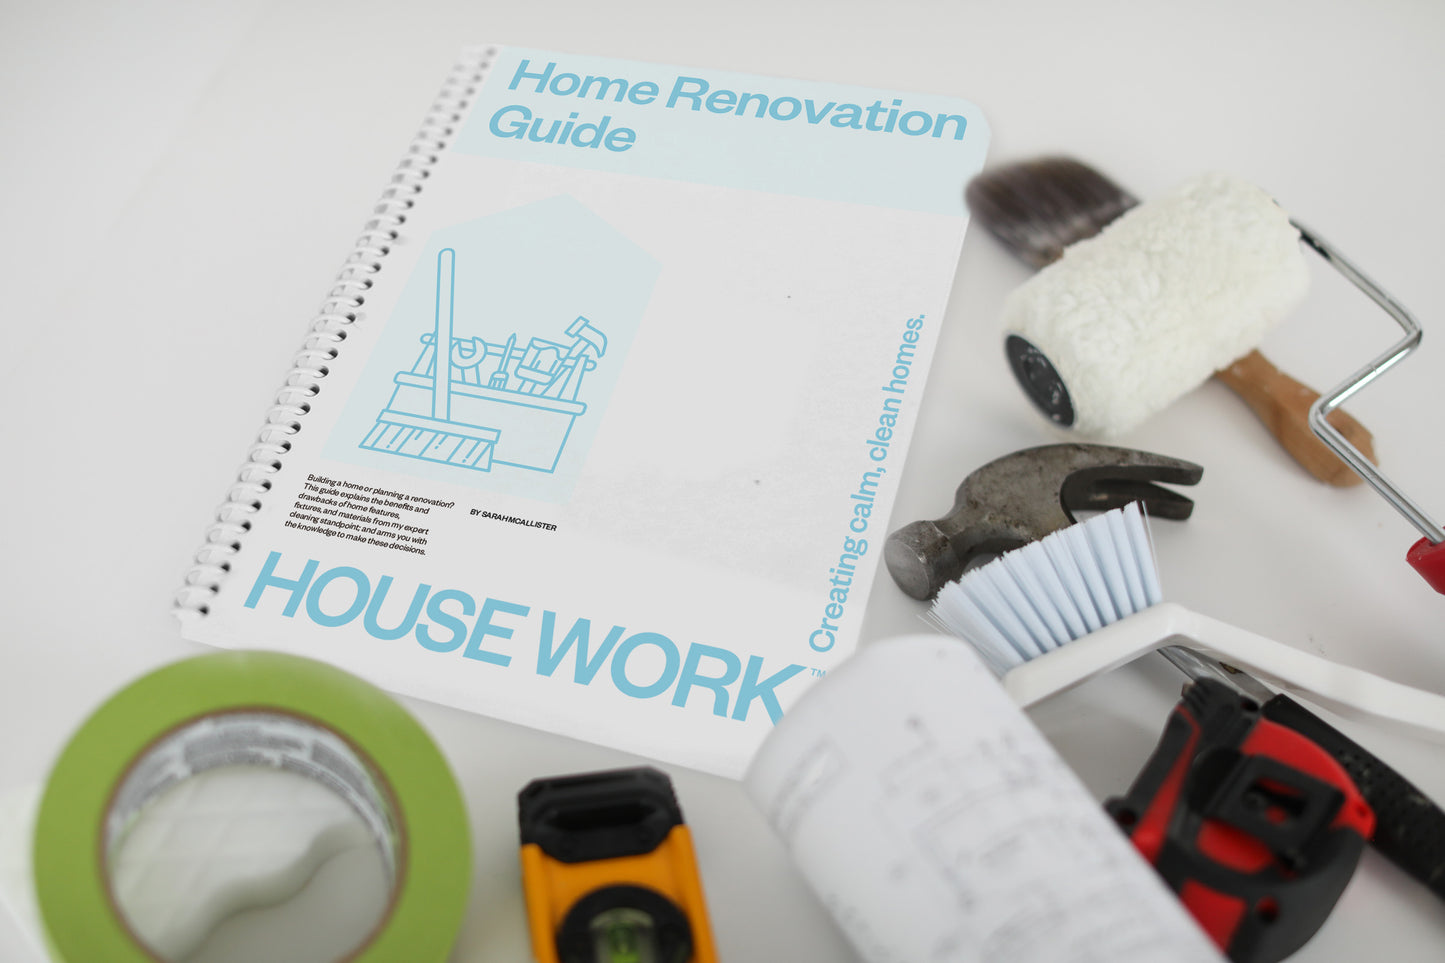 Home Renovation Guide (Hard Copy)